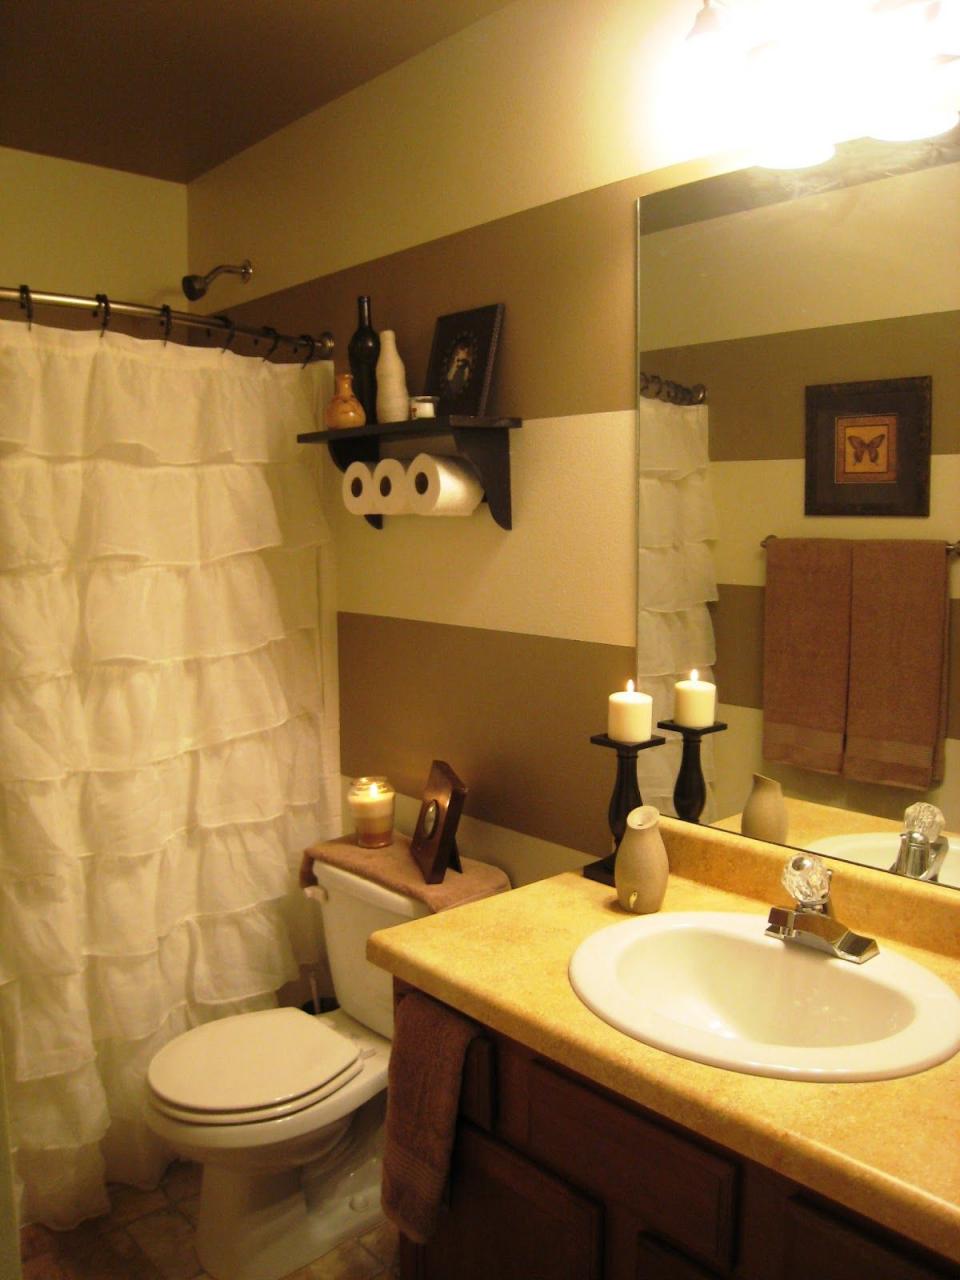 Vivaciously Vintage Tour our Home! Guest bathroom decor, Bathroom